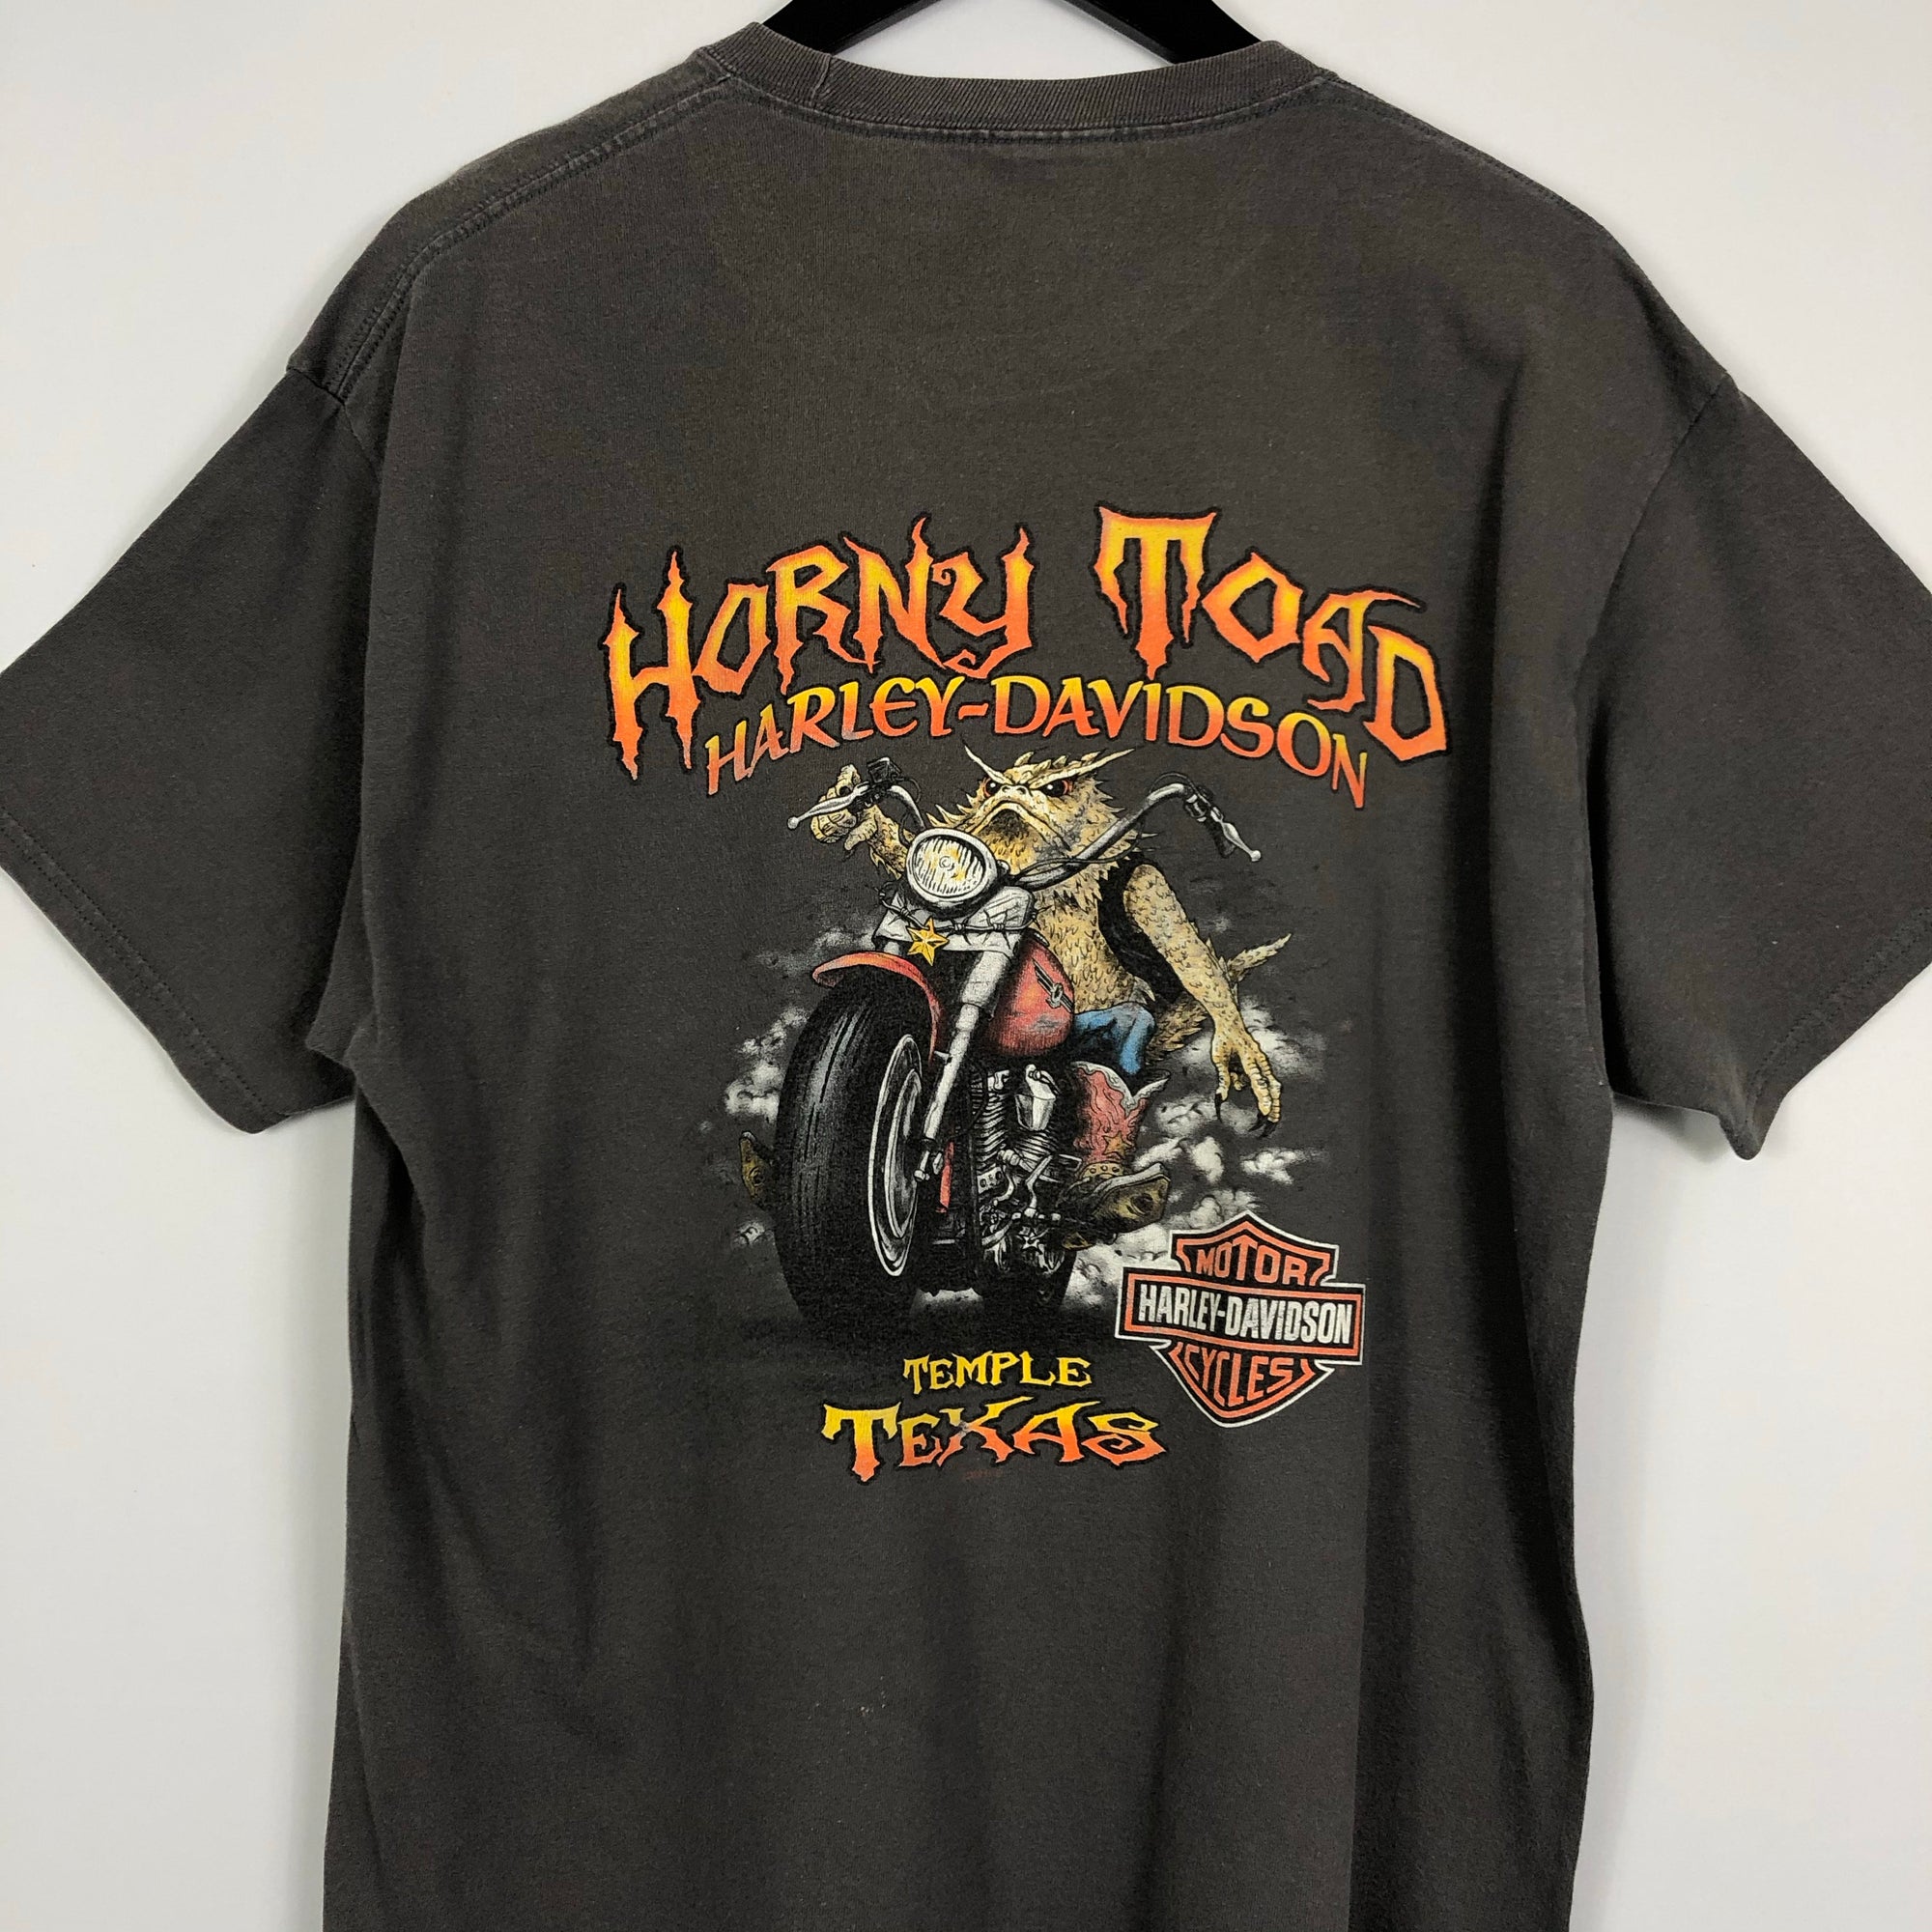 Vintage Harley Davidson ‘Horny Toad’ Tee - Large